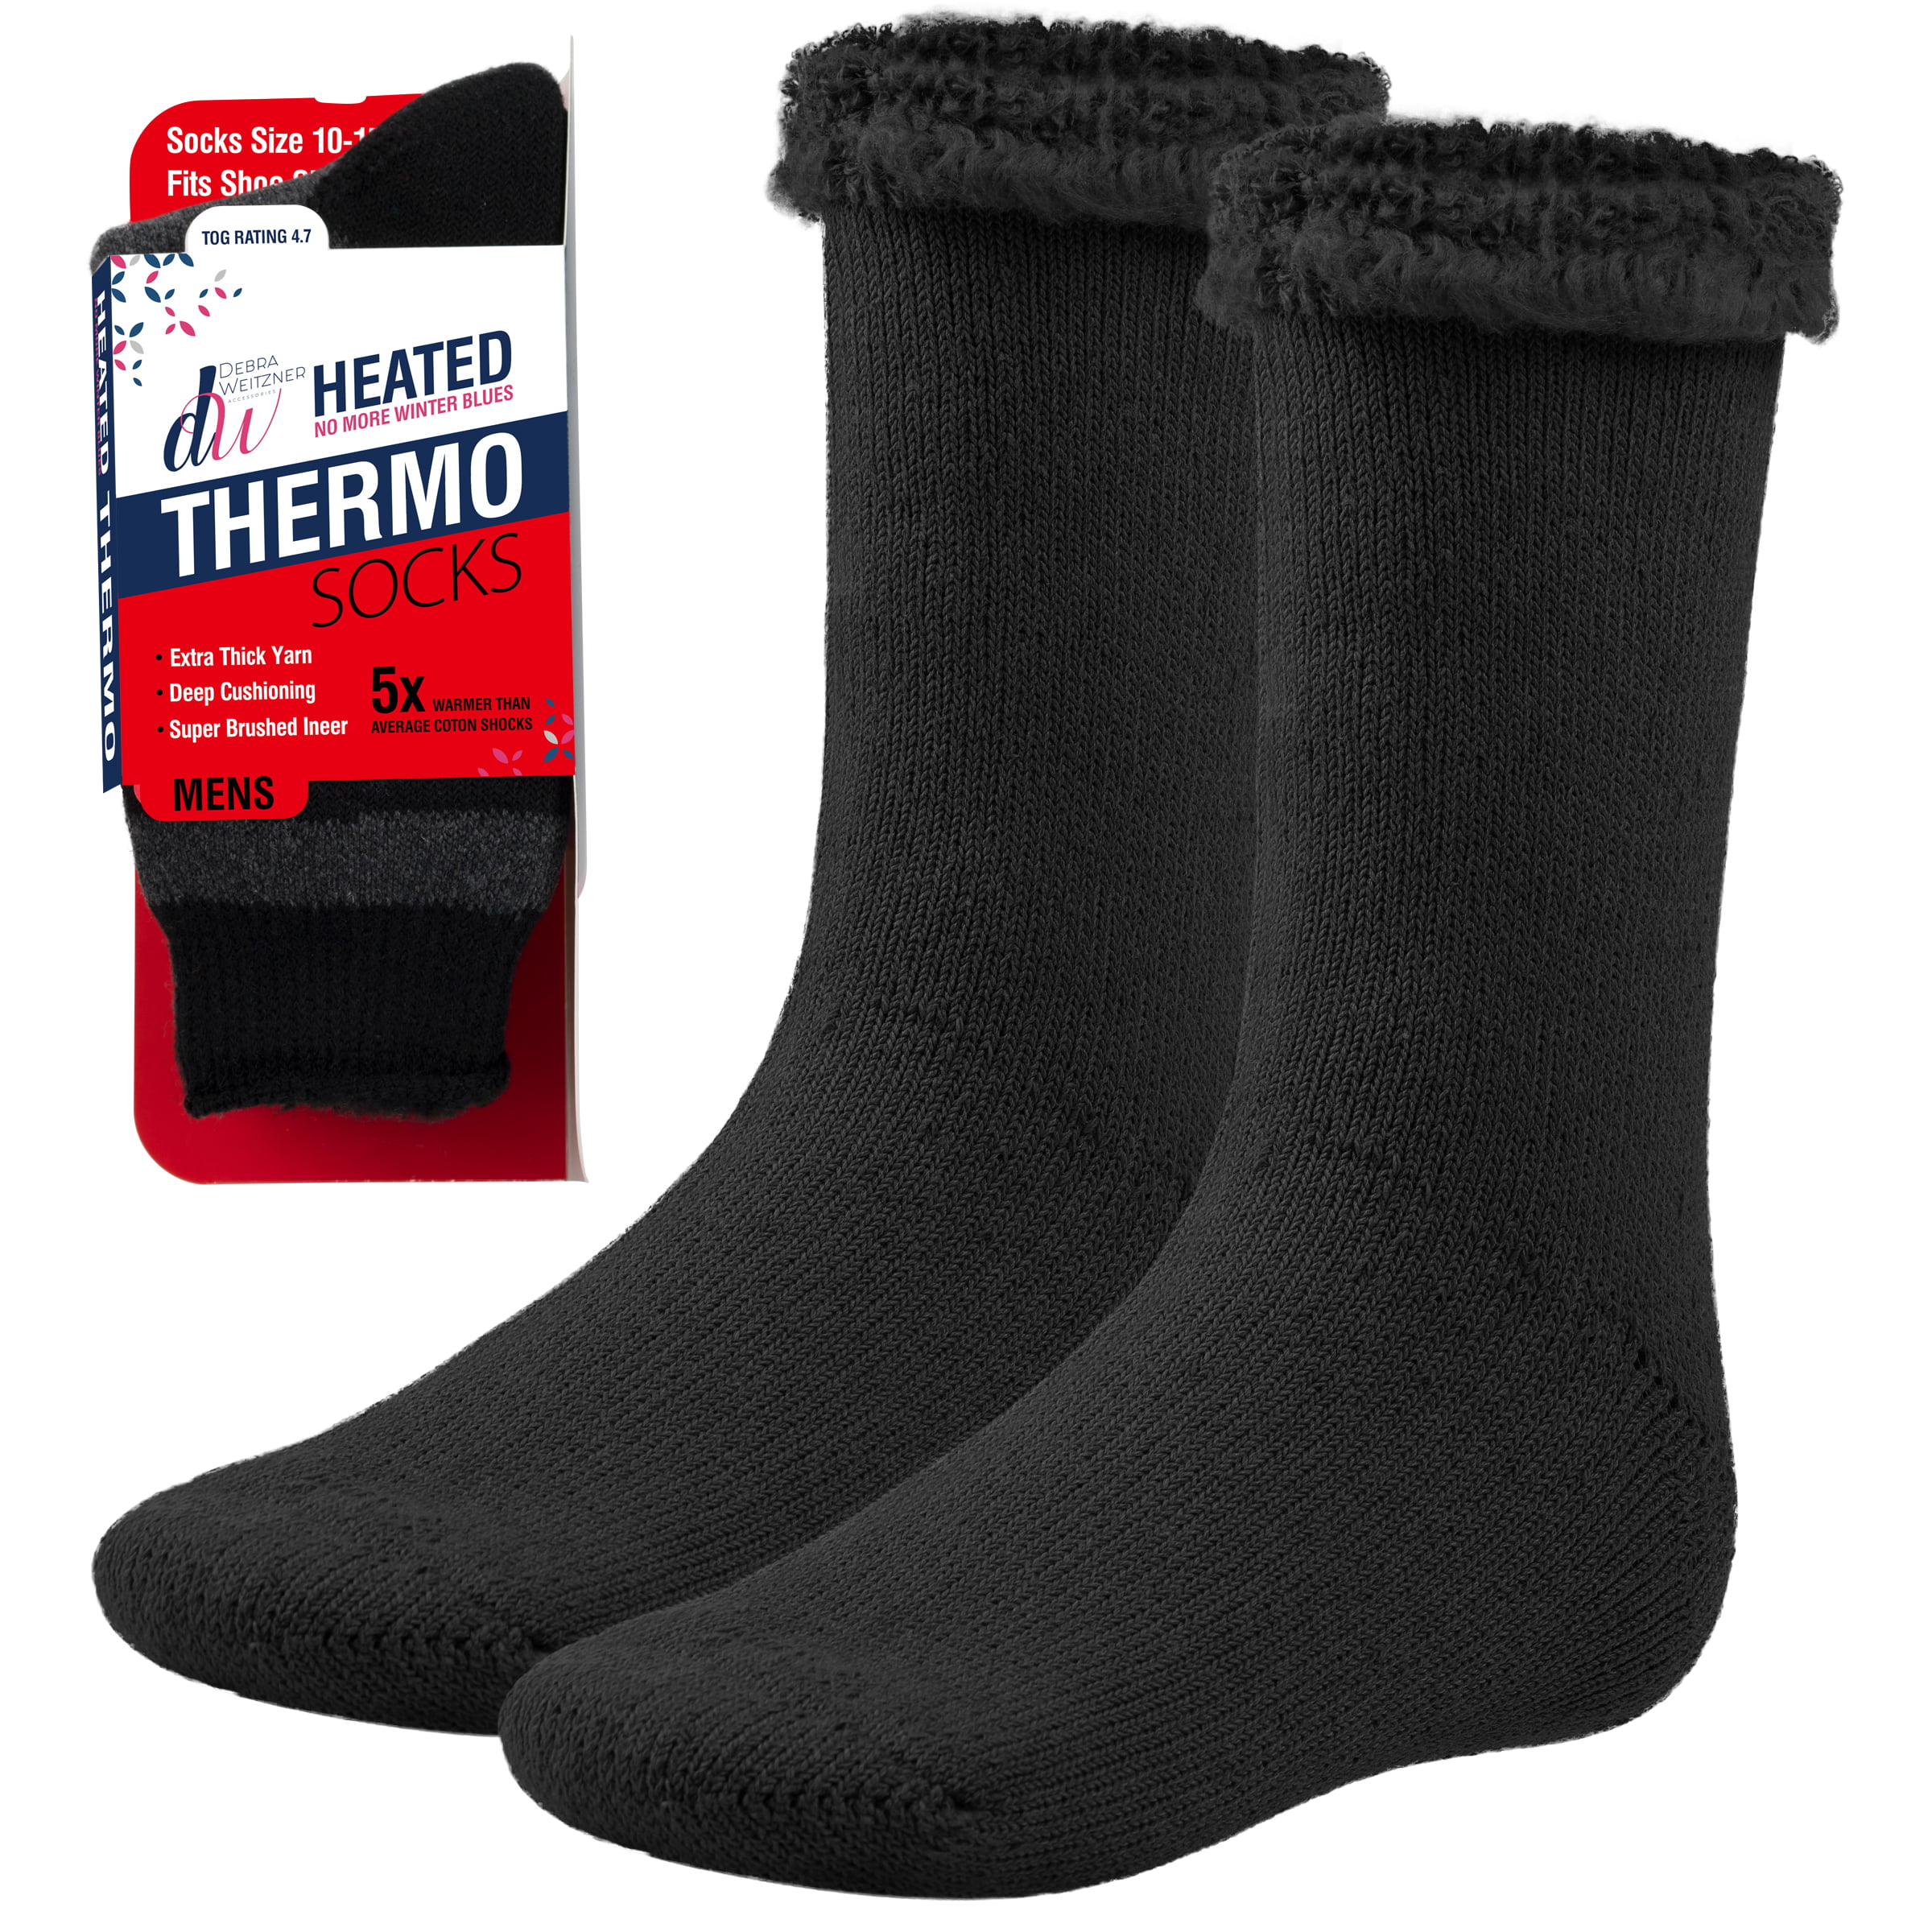 Womens Winter Warm Work Thermal Heated Heavy Duty Boots Socks Cashmere Snow Sock